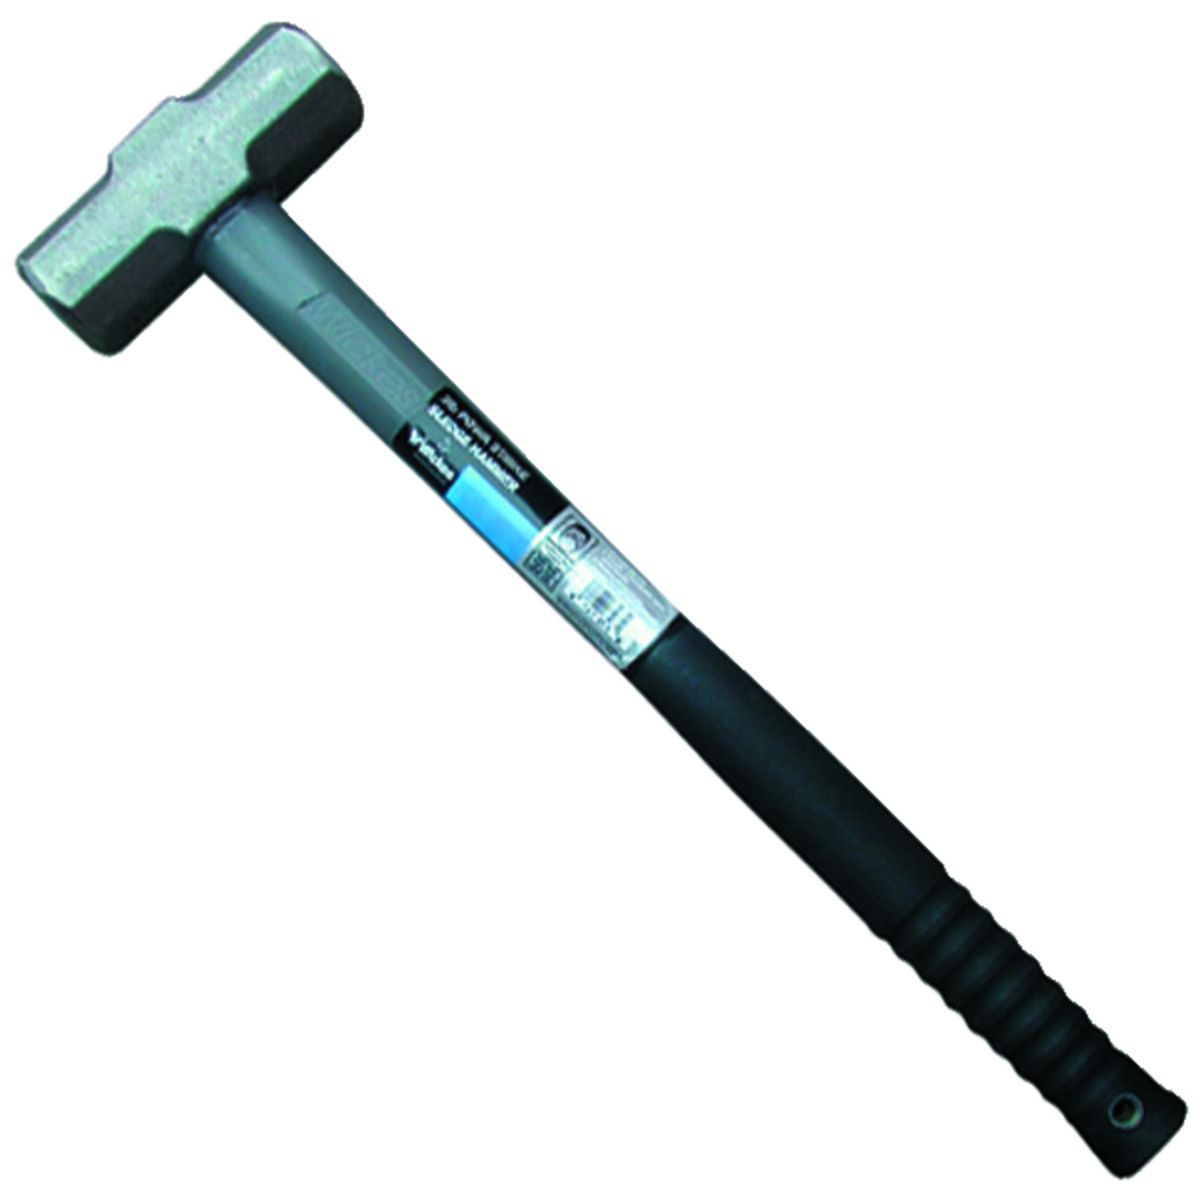 Wickes Powastrike Sledge Hammer - 7lb